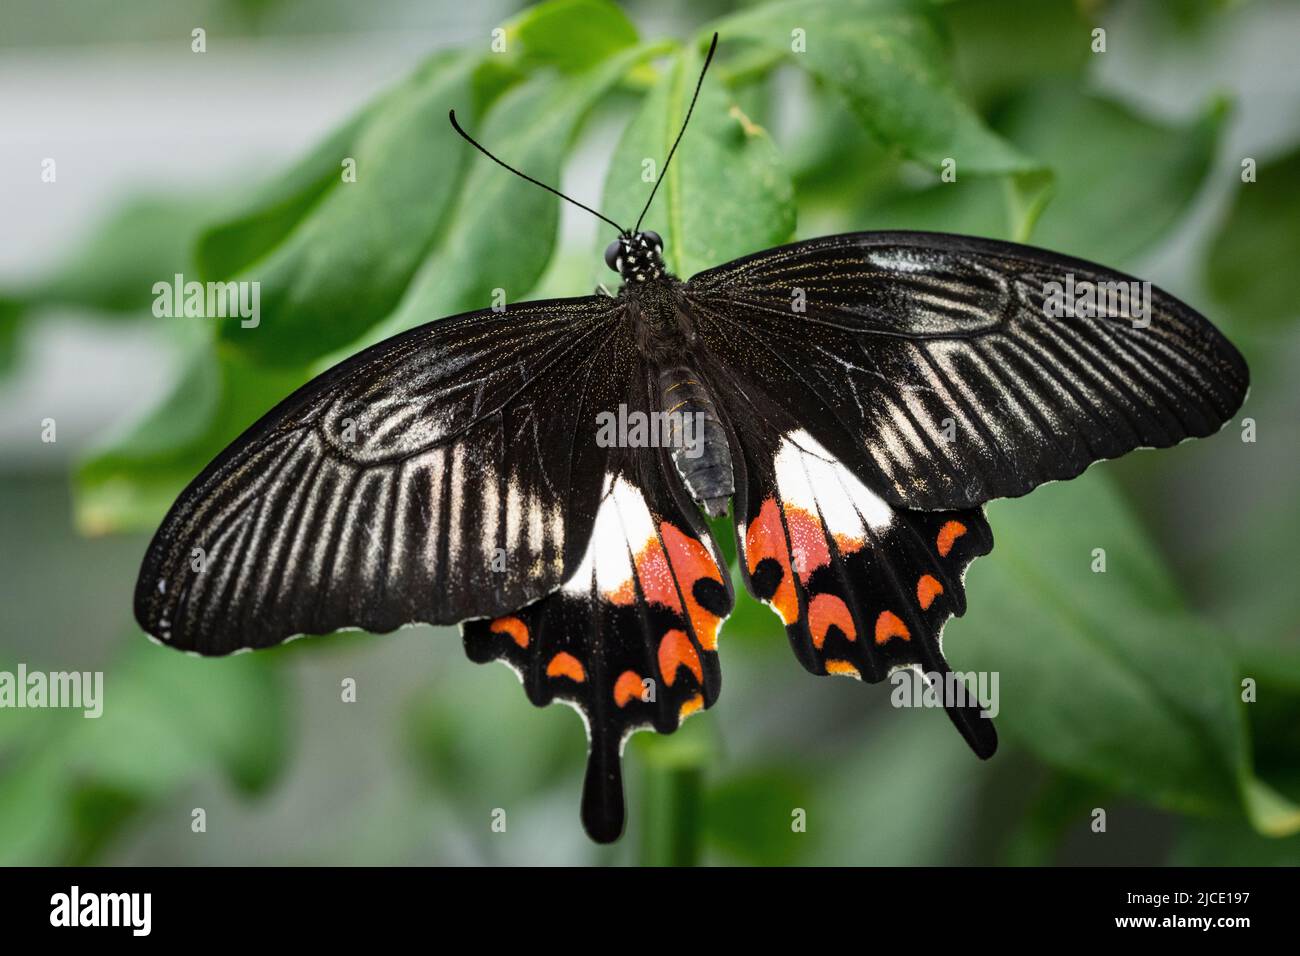 Common mormon butterfly flying freely in a vivarium. Stock Photo